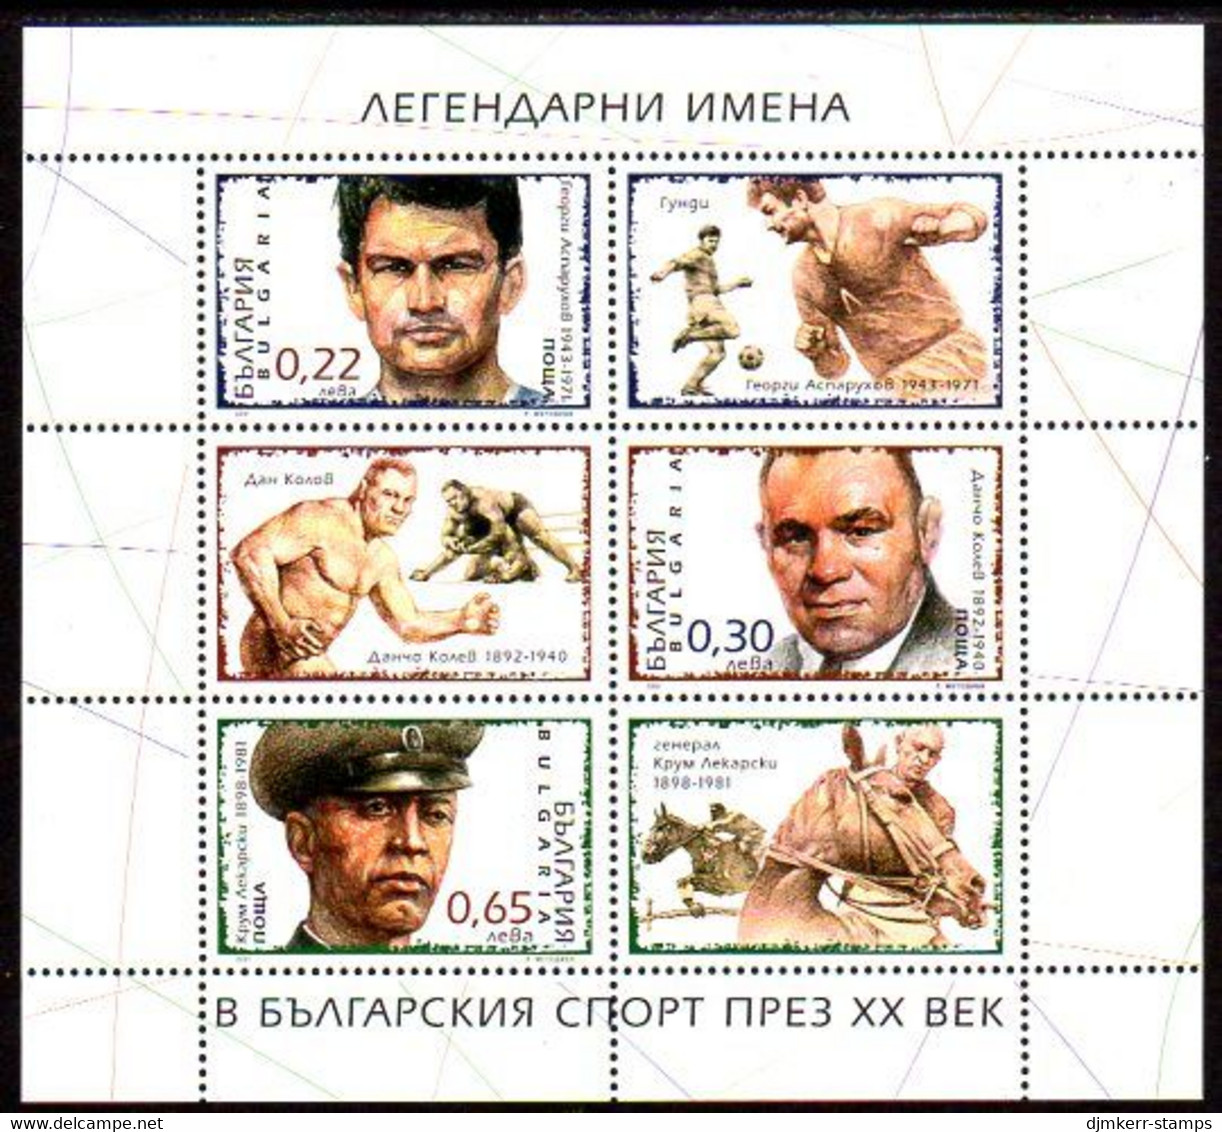 BULGARIA 2001 Sportsmen Of The 20th Century Block MNH / **..  Michel Block 248 - Blocks & Sheetlets